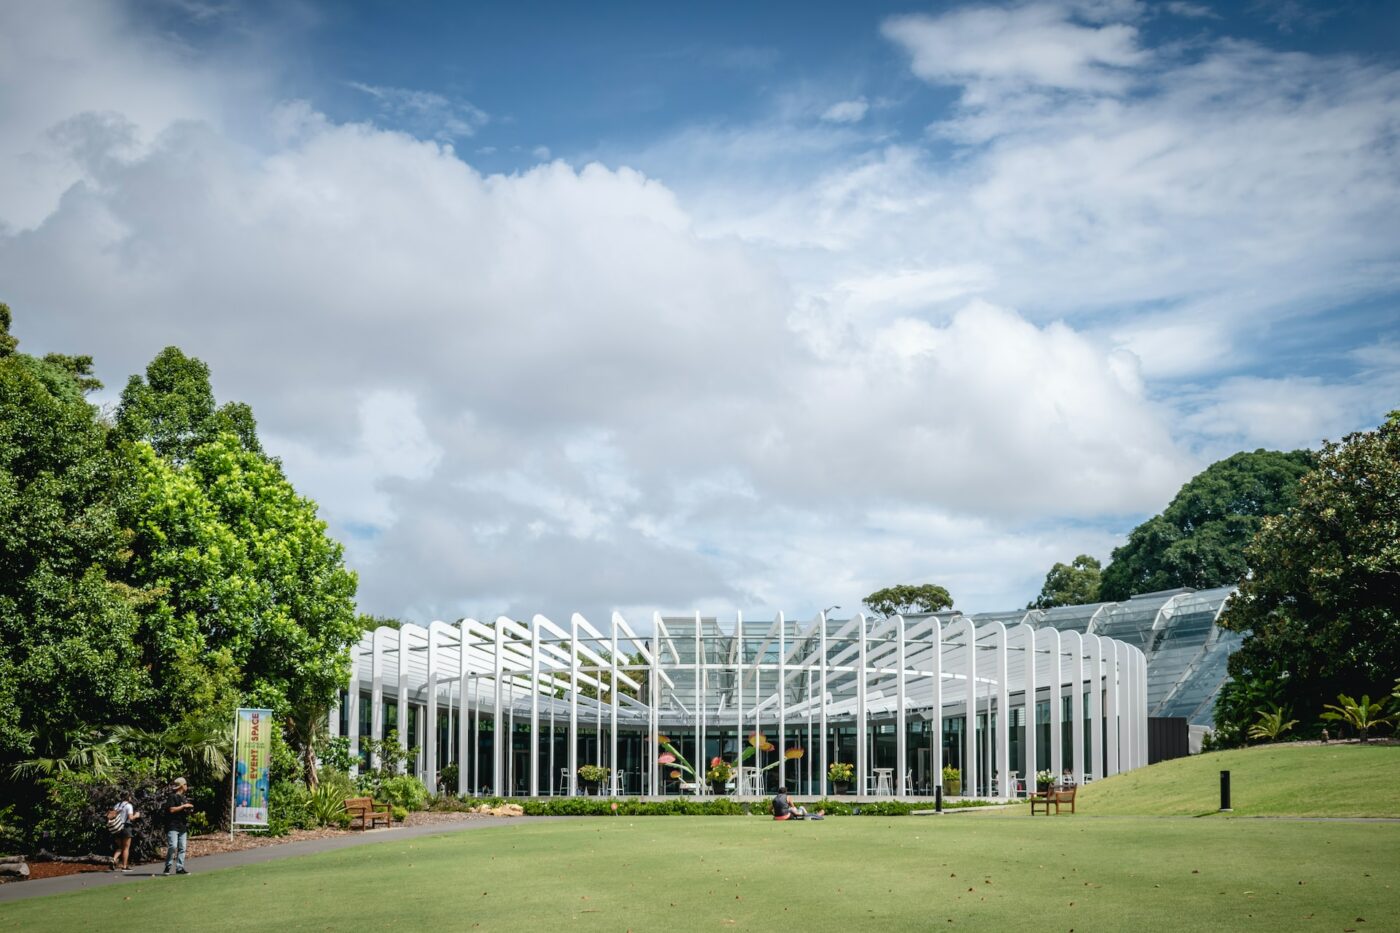 the calyx at Royal Botanic Gardens Sydney